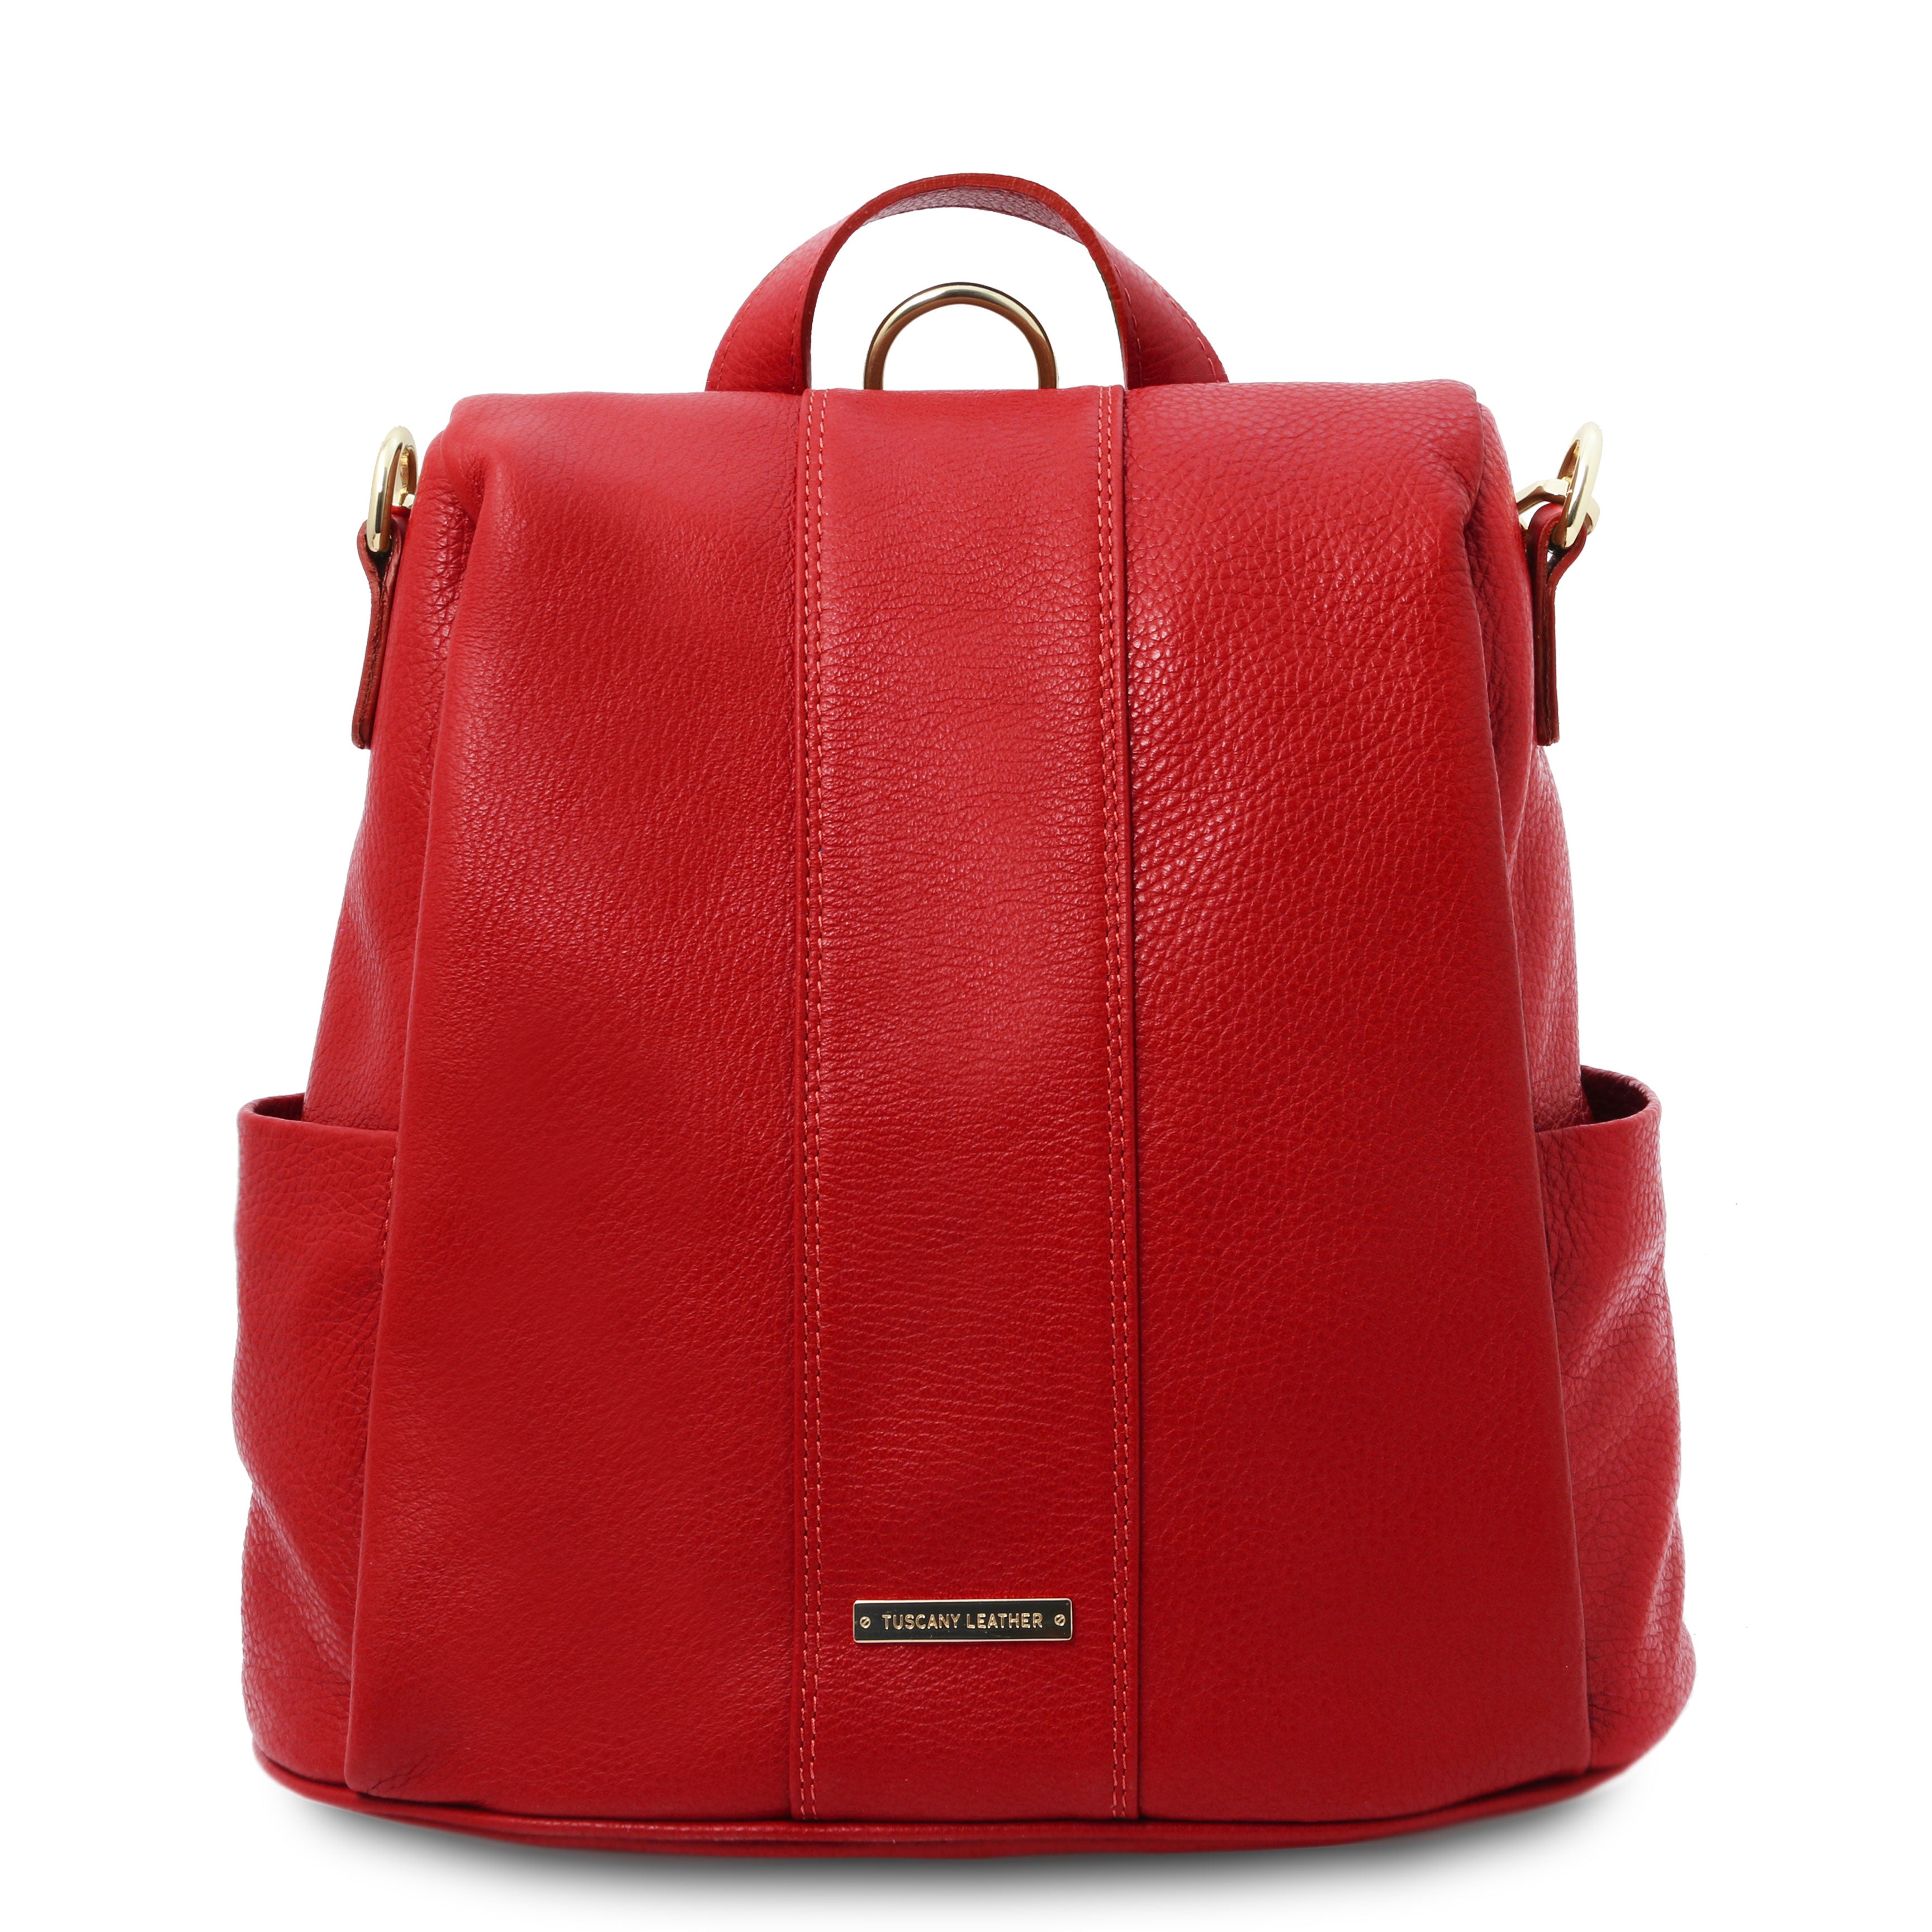 Tuscany Leather rugtas zacht leer TL Bag rood